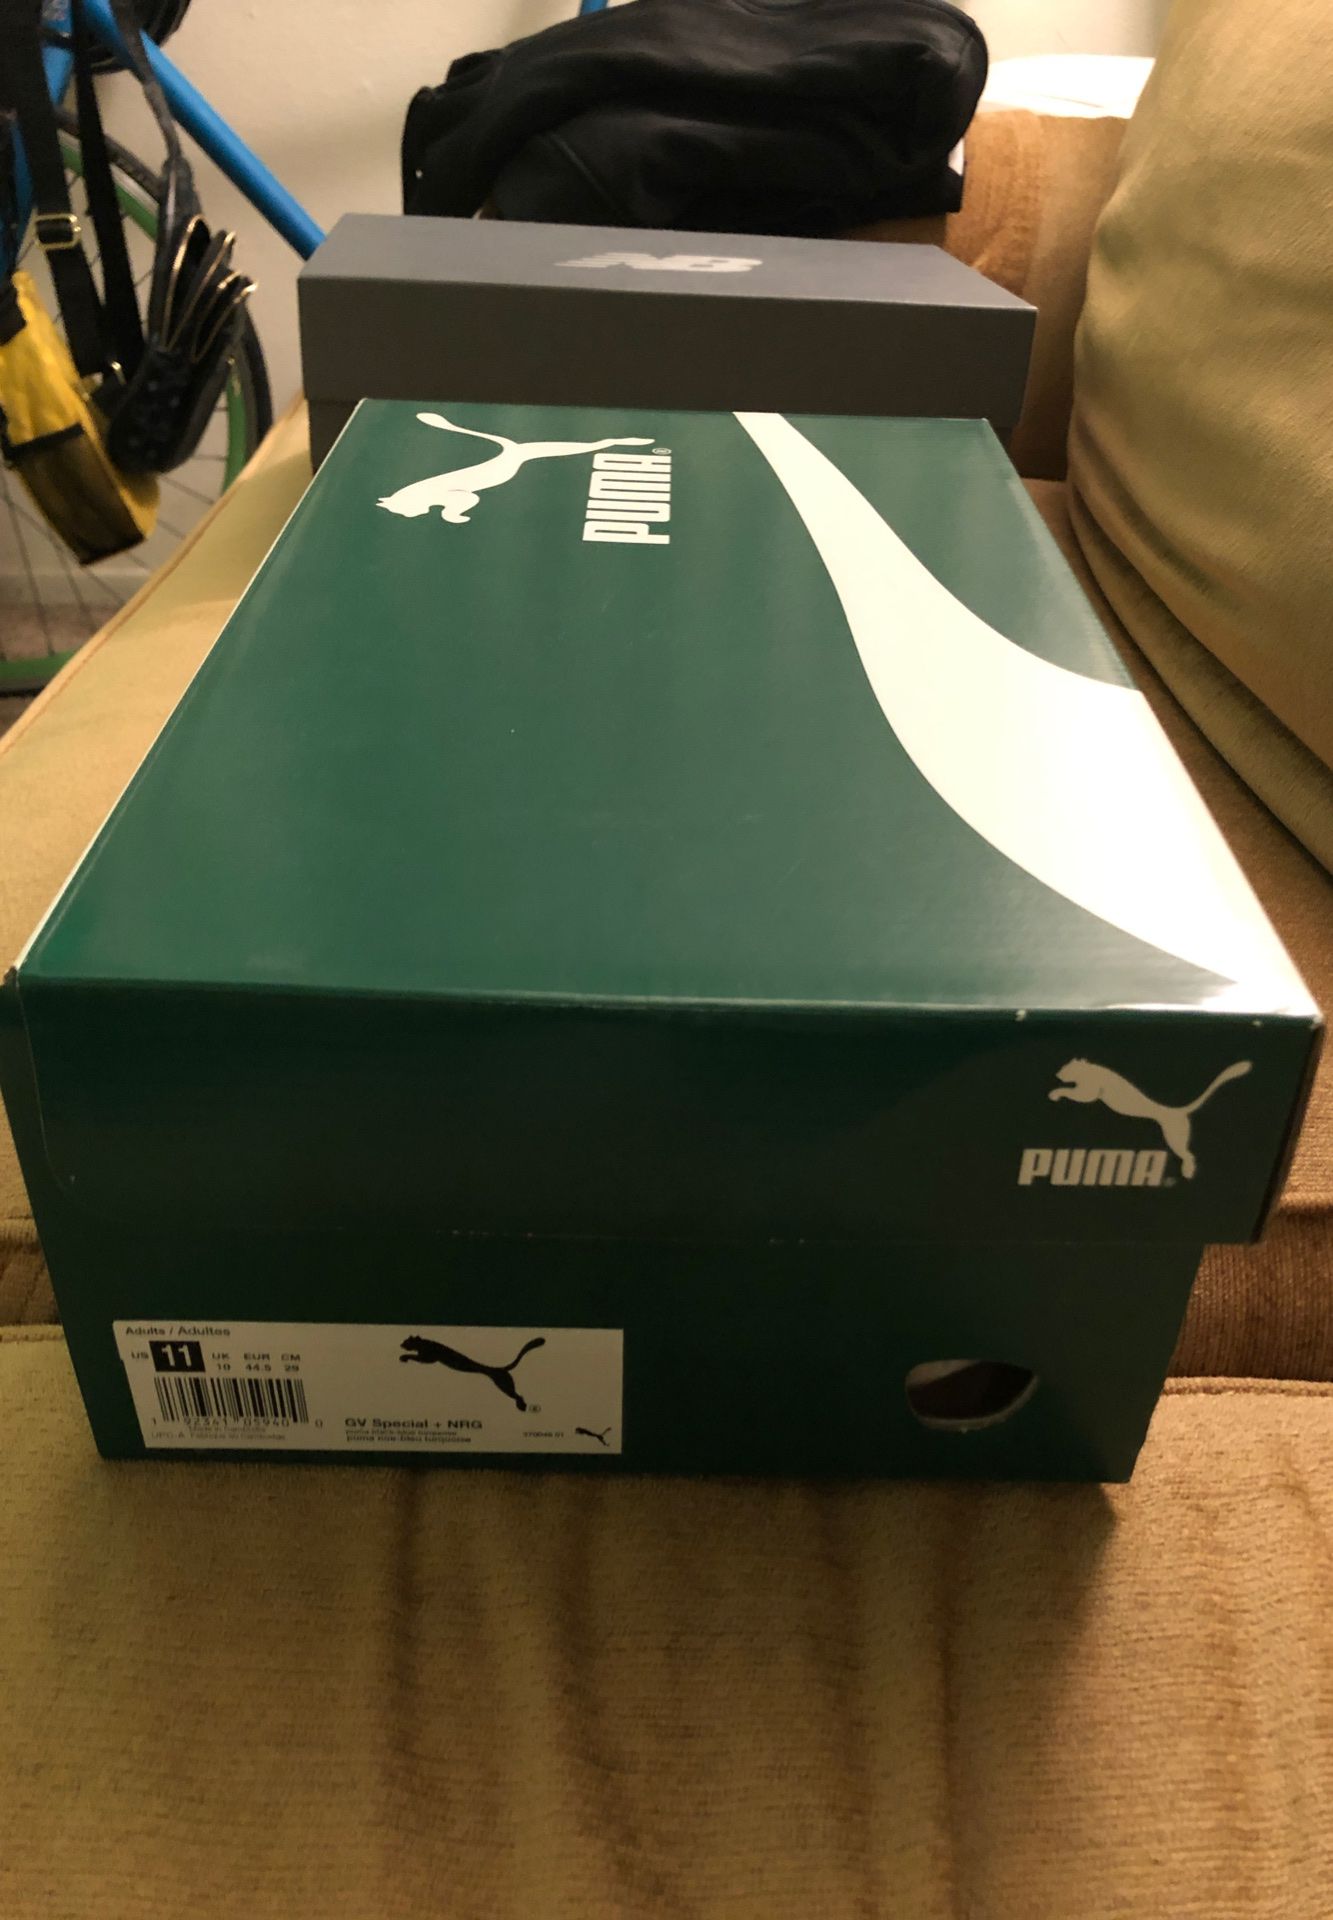 (EMPTY) PUMA Size 11 GV Special + NRG shoe box